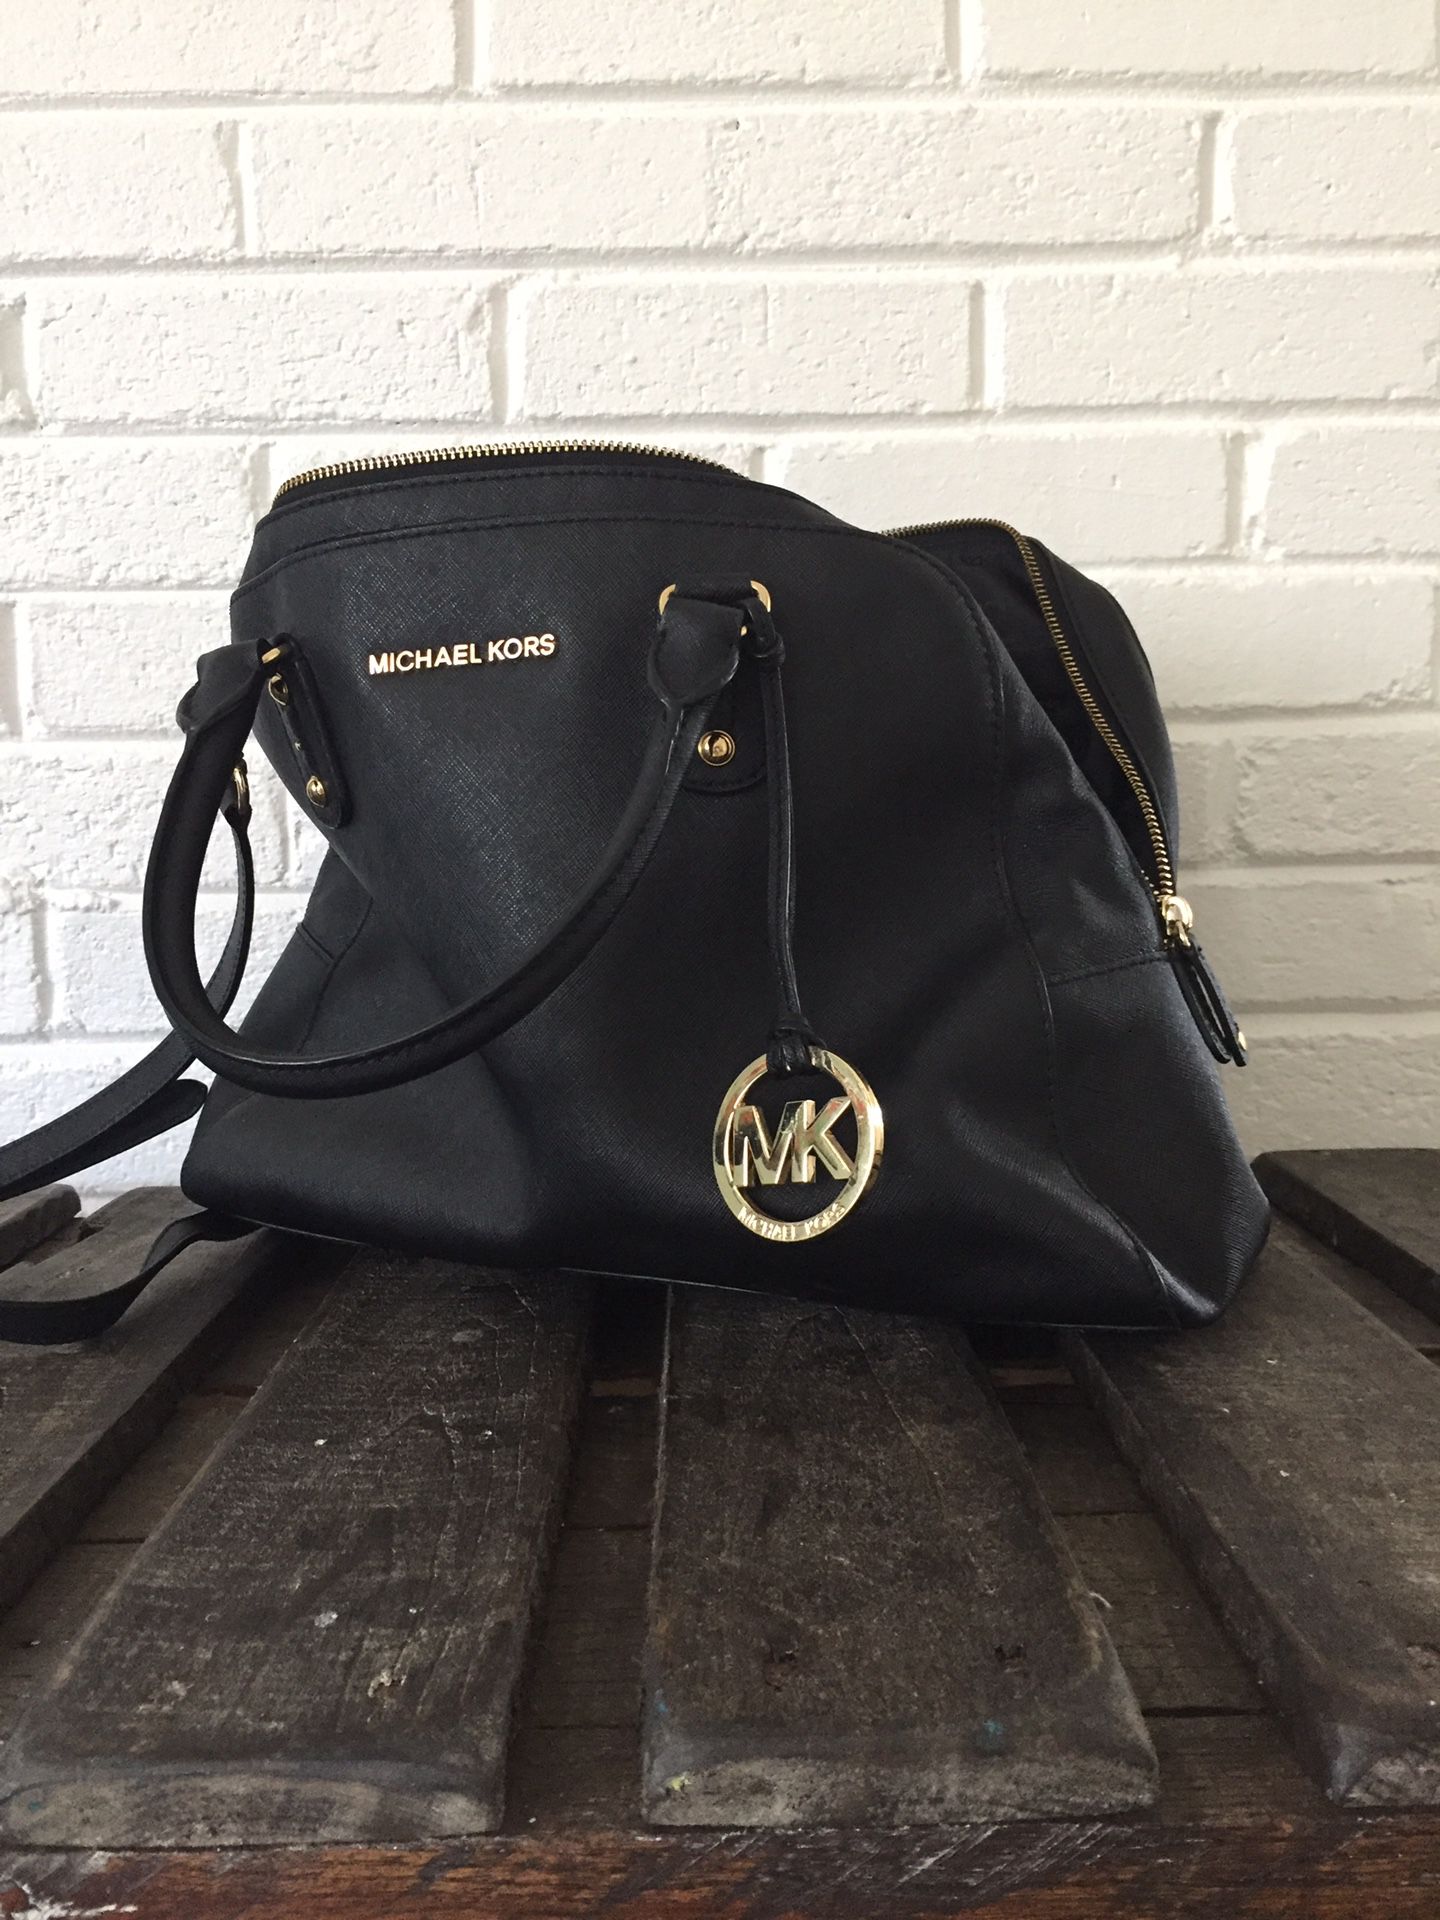 Michael Kors black and gold purse